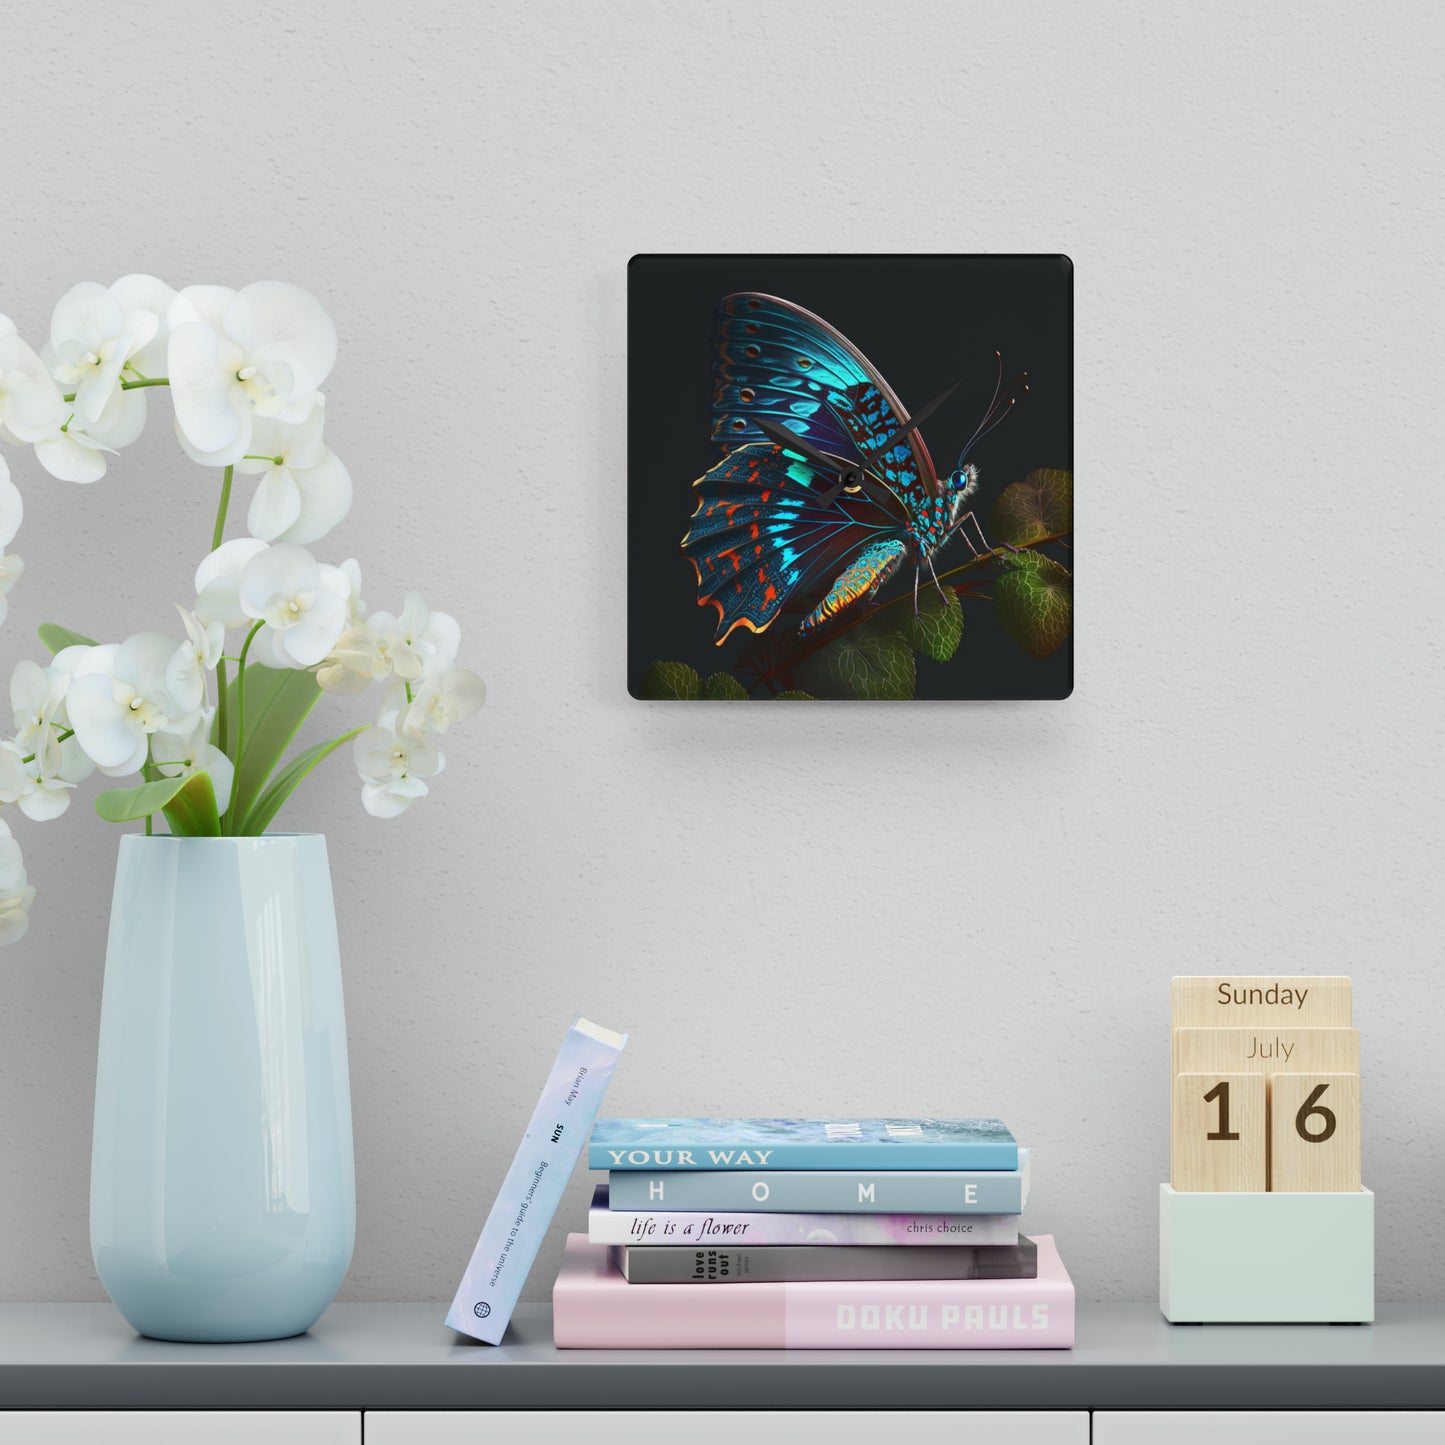 Acrylic Wall Clock Hue Neon Butterfly 2